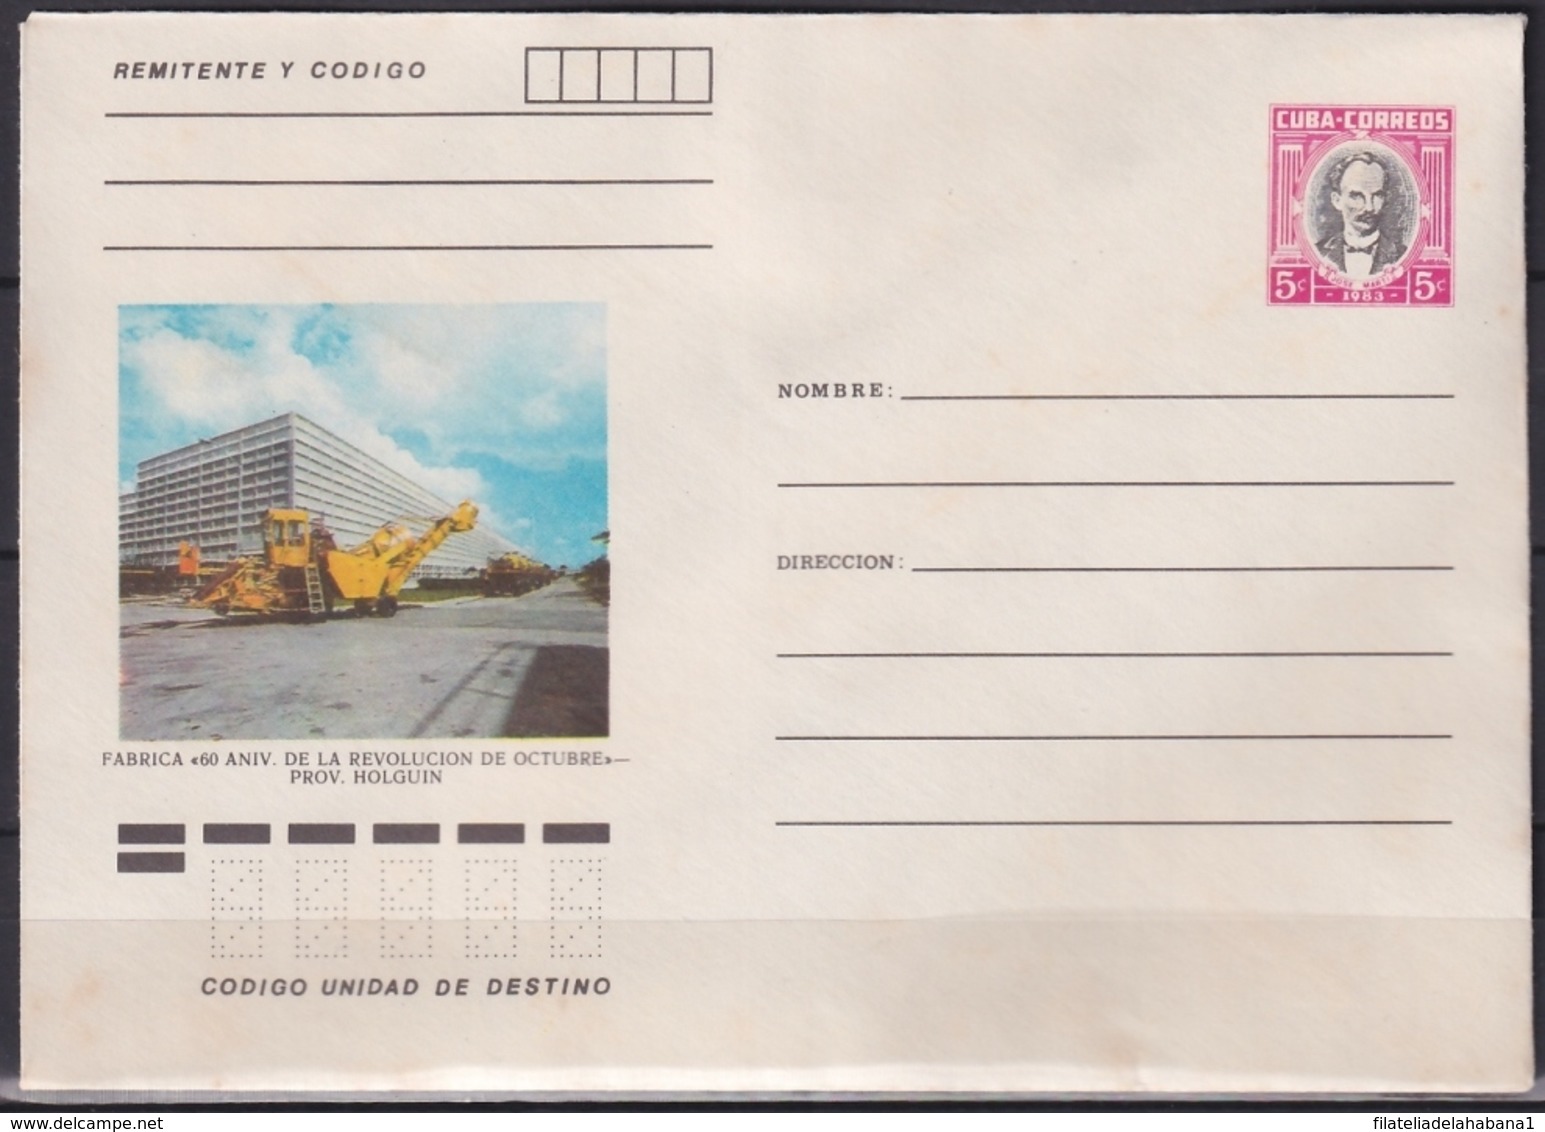 1983-EP-219 CUBA 1983 5c POSTAL STATIONERY COVER. HOLGUIN, FABRICA 60 ANIVERSARIO DE LA REVOLUCION DE OCTUBRE - Lettres & Documents